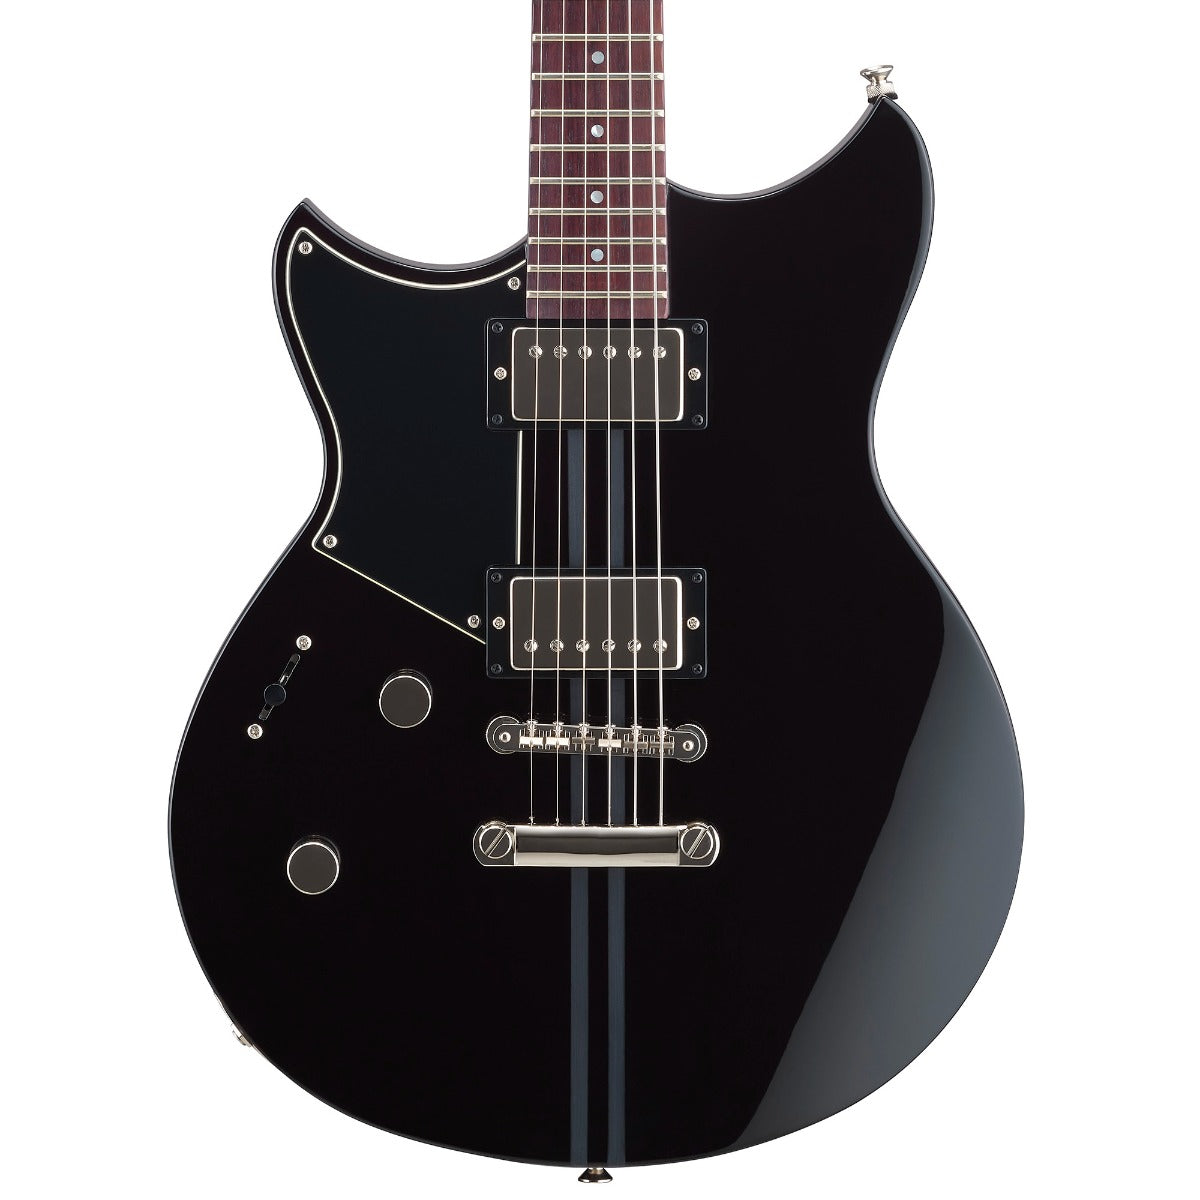 Yamaha RSE20L Revstar Element Left-Handed Electric Guitar  - Black, View 1